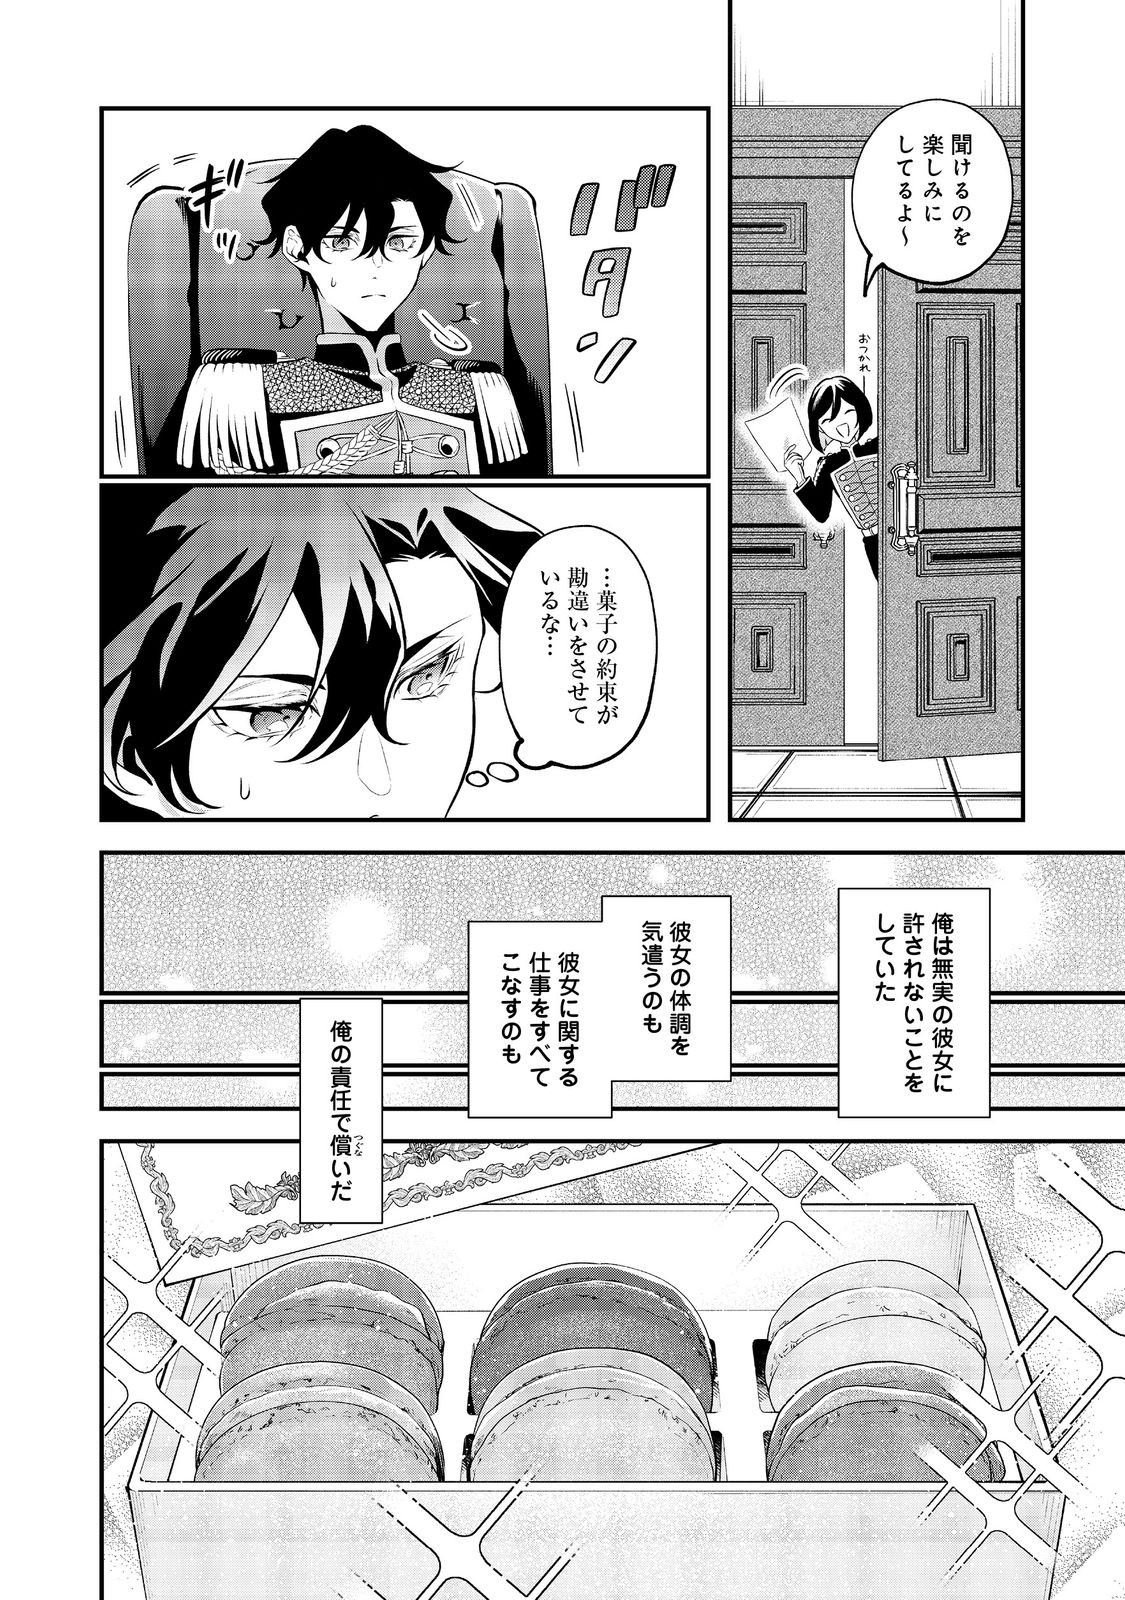 Megasametara Tougokusareta Akujo Datta - Chapter 7.1 - Page 14